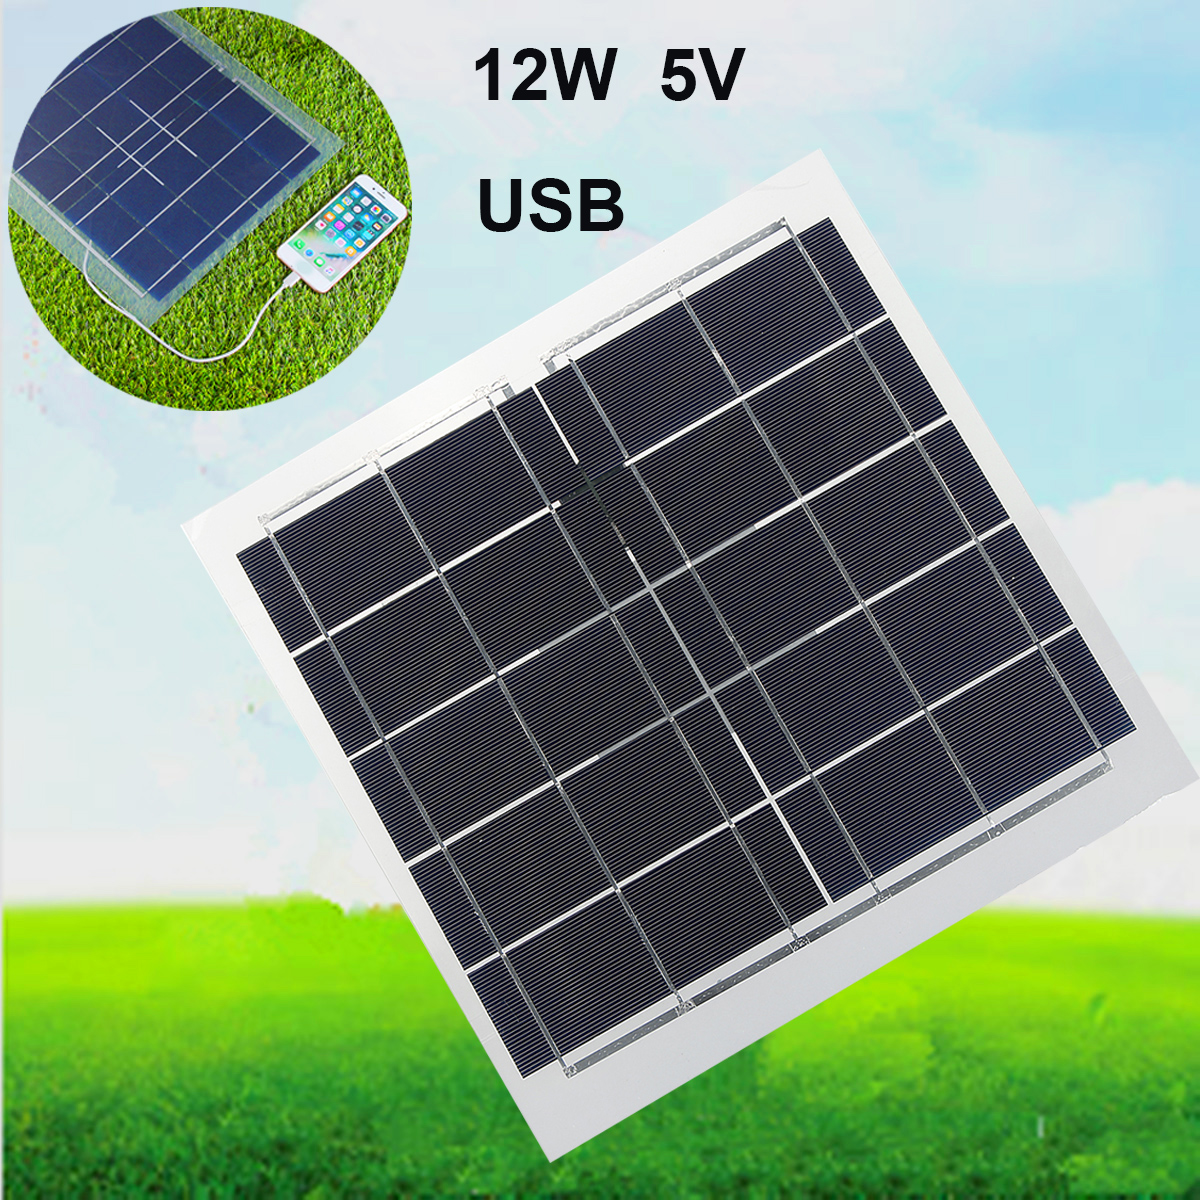 Elfeland® SP-12W5V Semi-Flexible Sunpower Solar Panel USB Interface For Smartphone 5